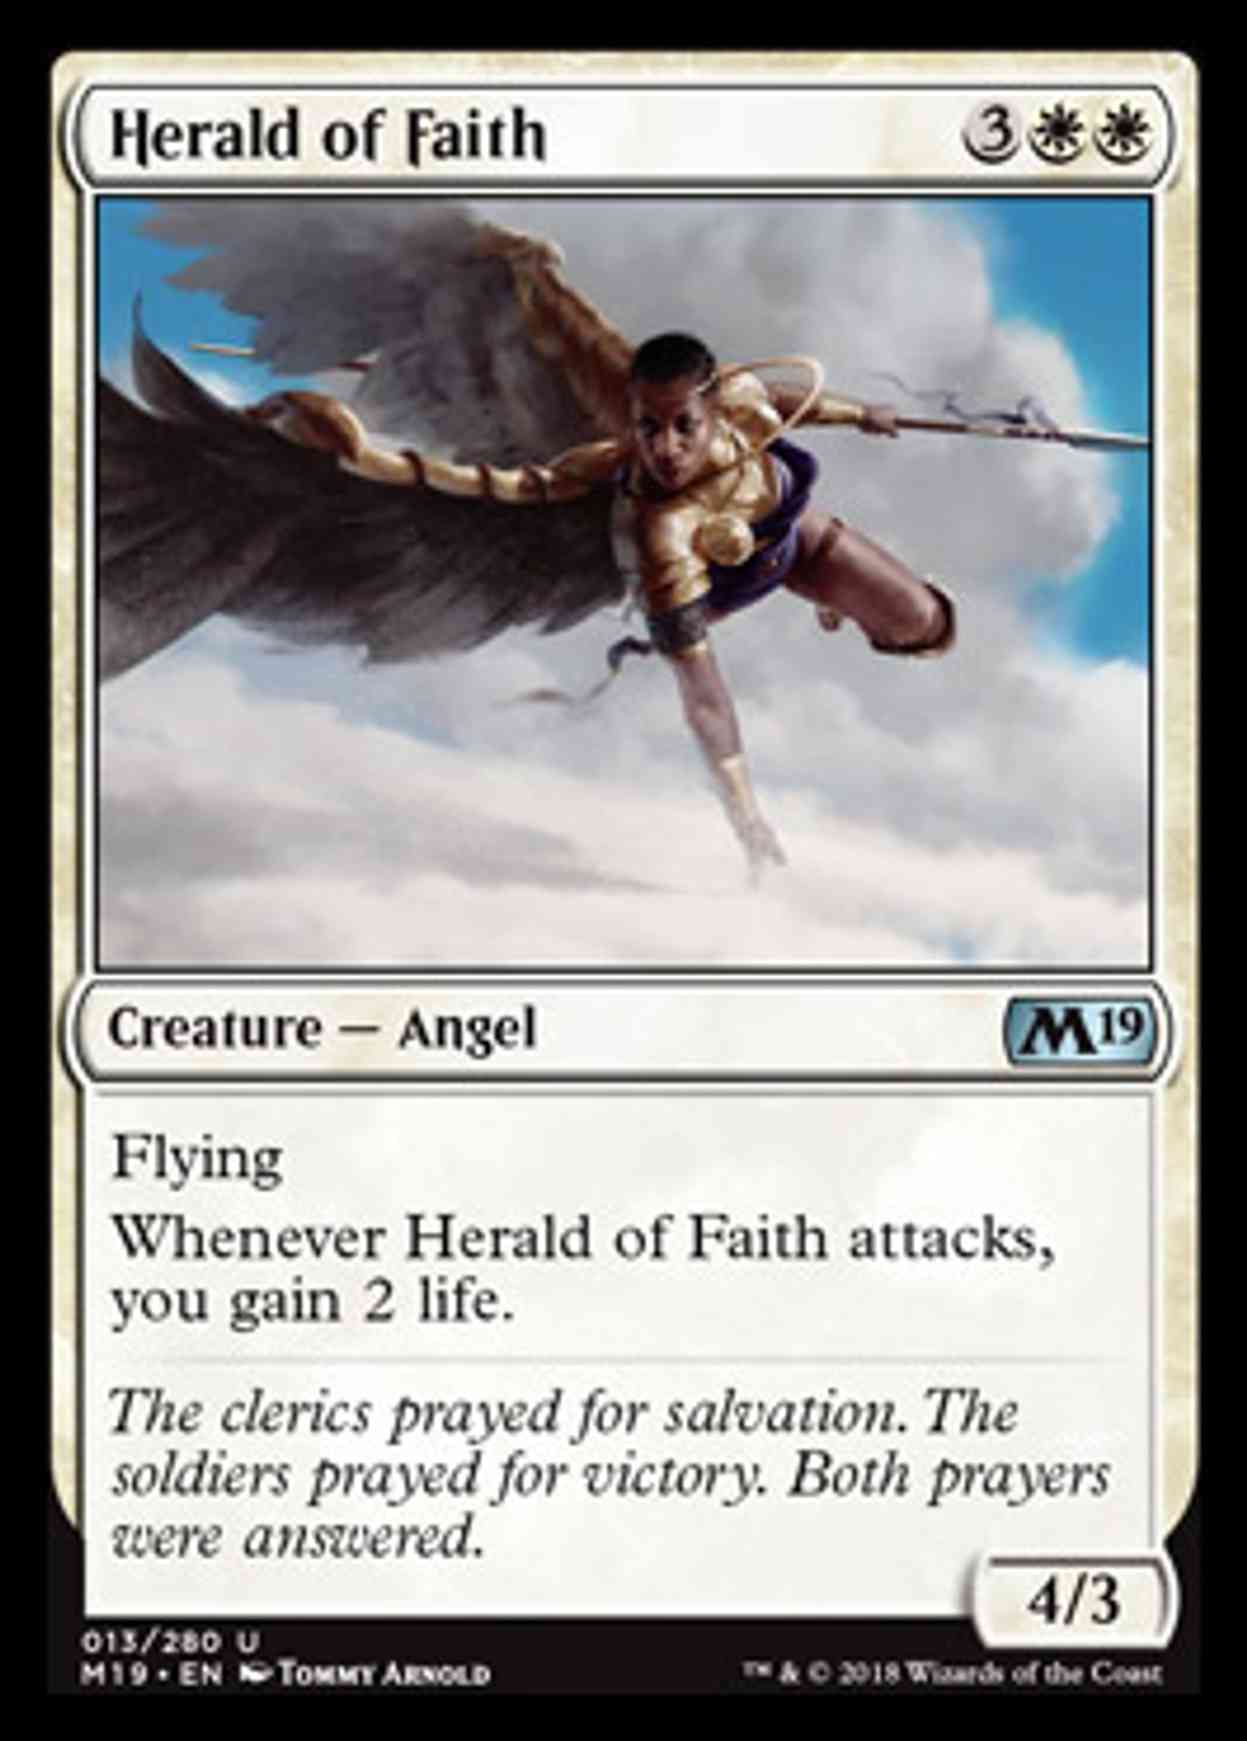 Herald of Faith magic card front